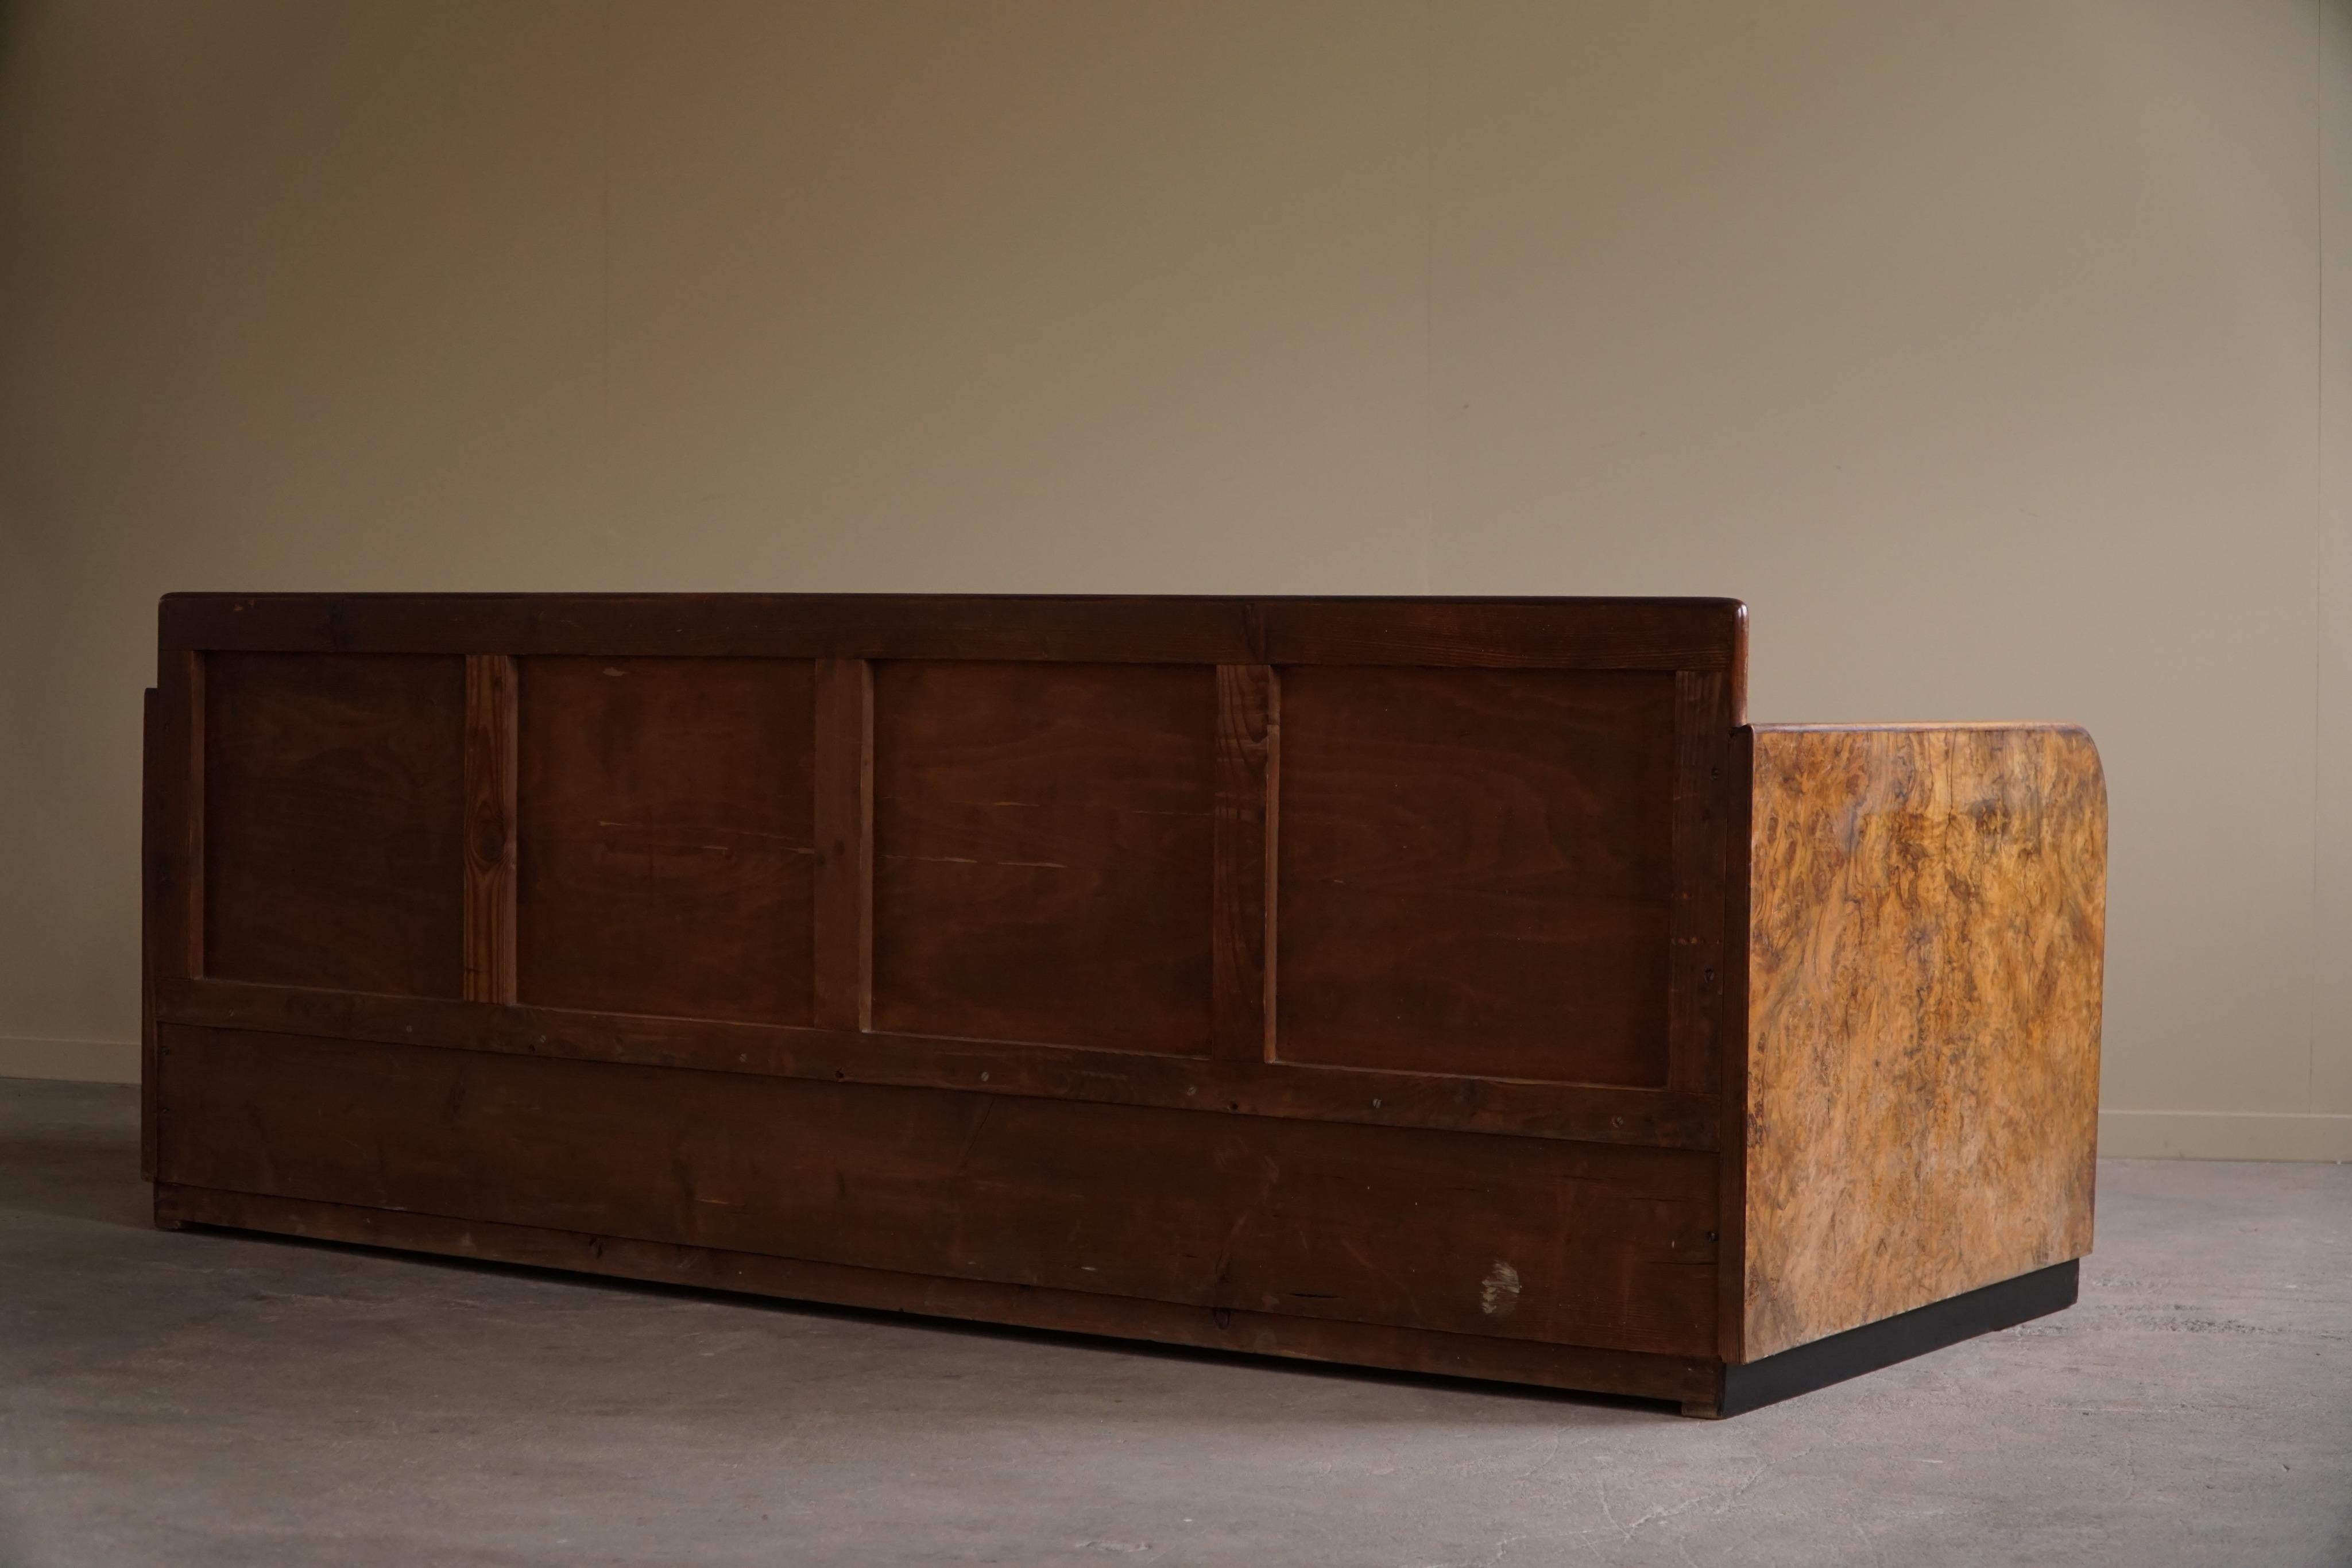 Sculptural Sofa in Nutwood & Burl, Art Deco, Swedish Cabinetmaker, 1940s For Sale 6